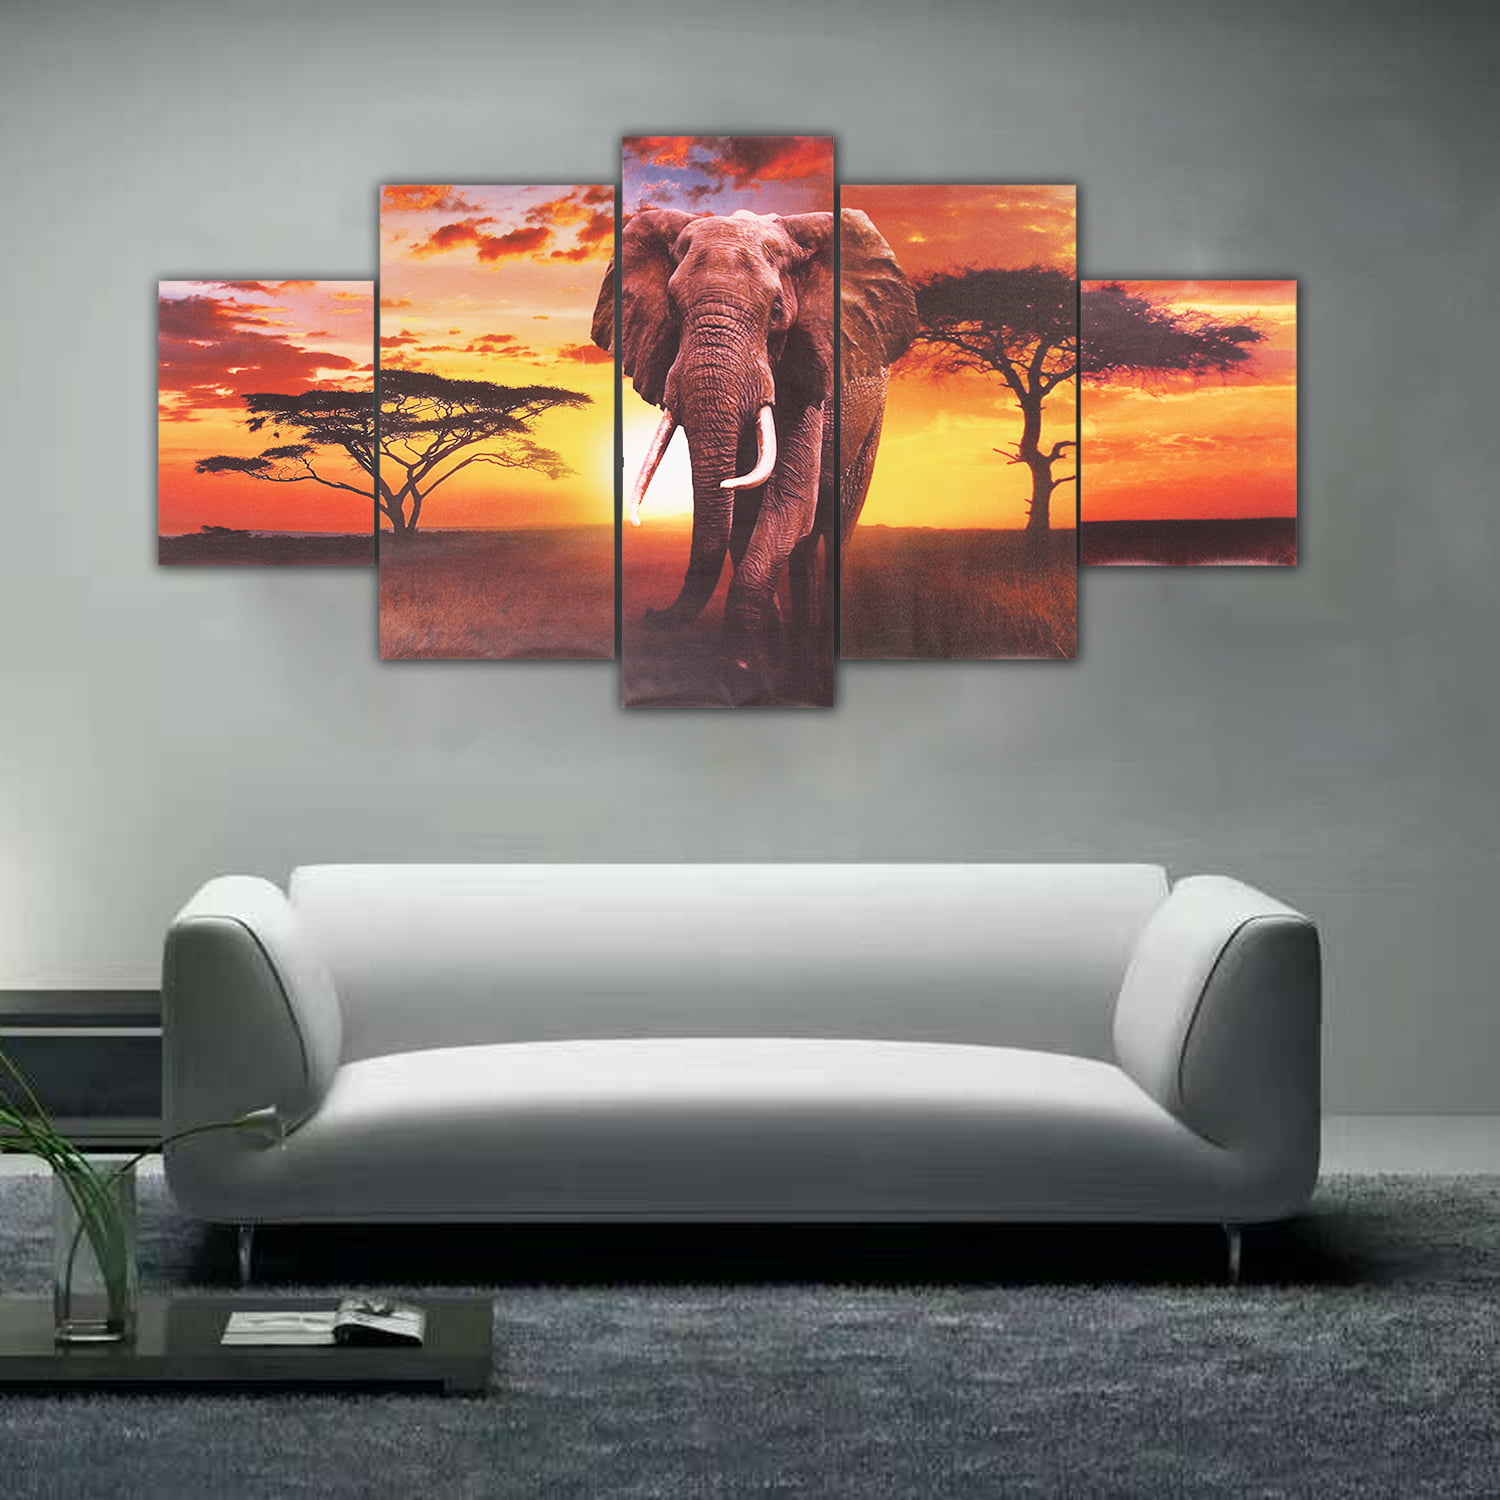 5 Panel Canvas art Canvas Painting Print Picture Sunset Elephant 